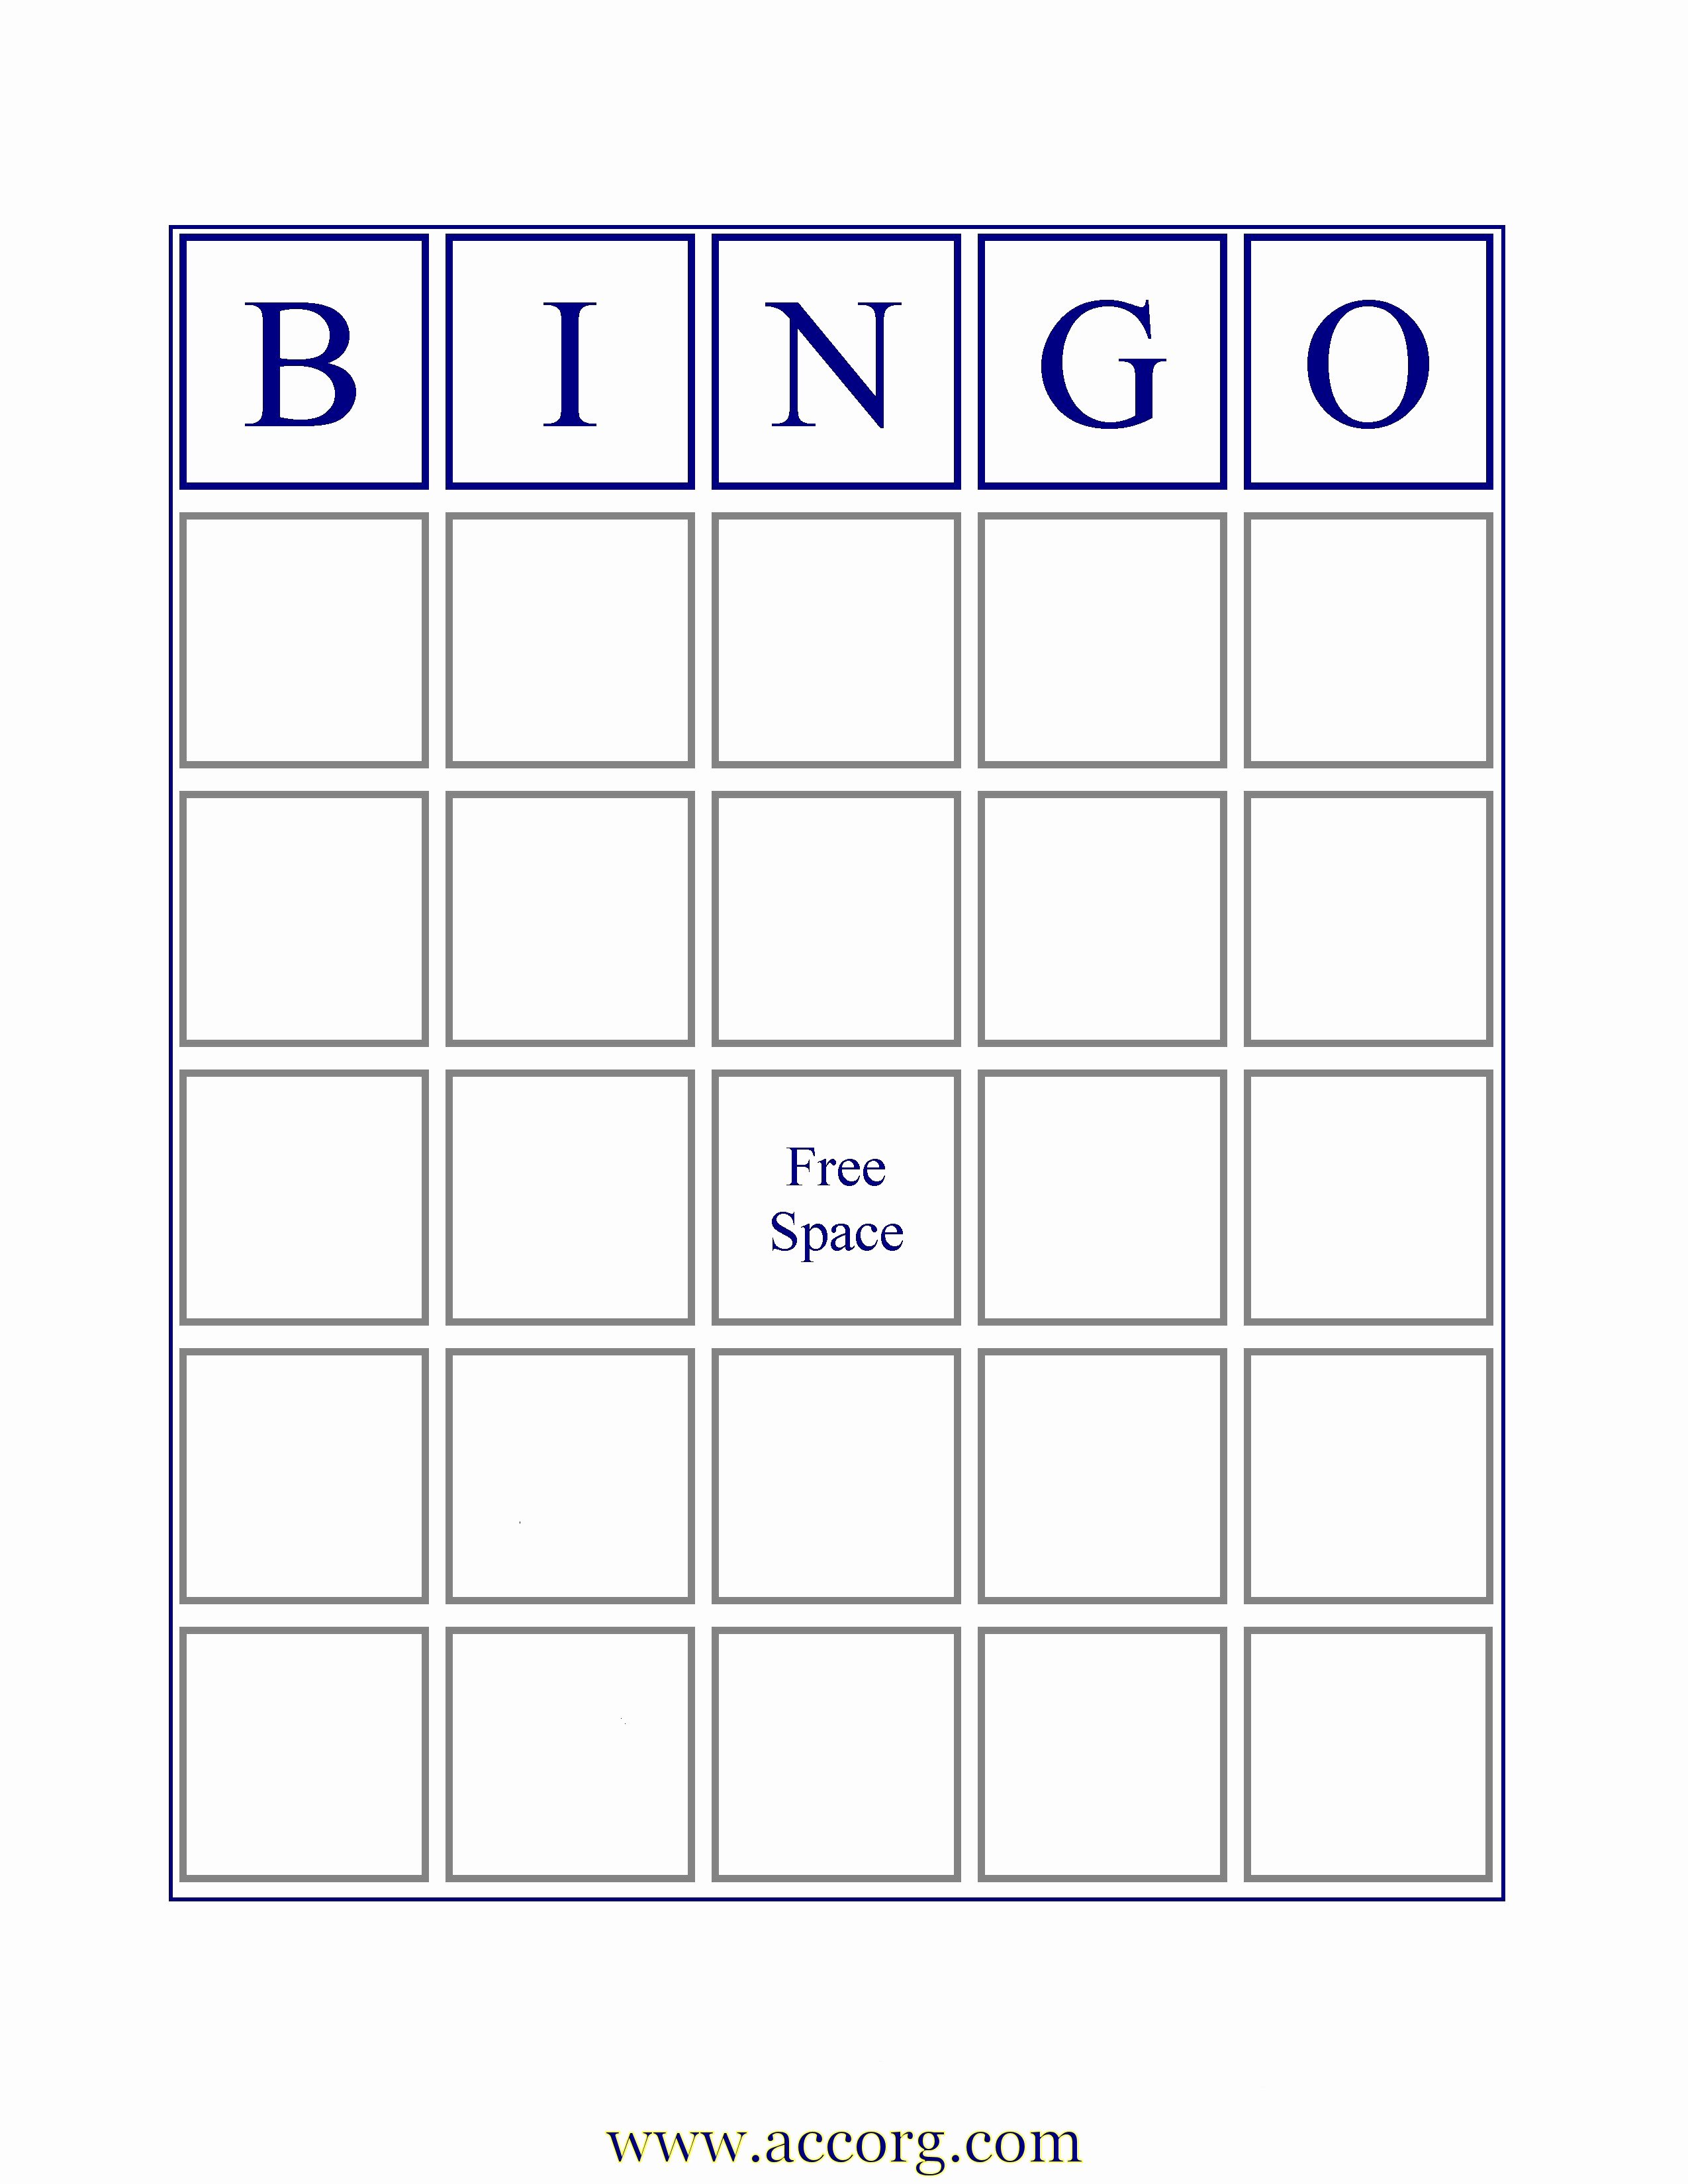 Free Printable Bingo Boards Best Of International Bingo association Downloads